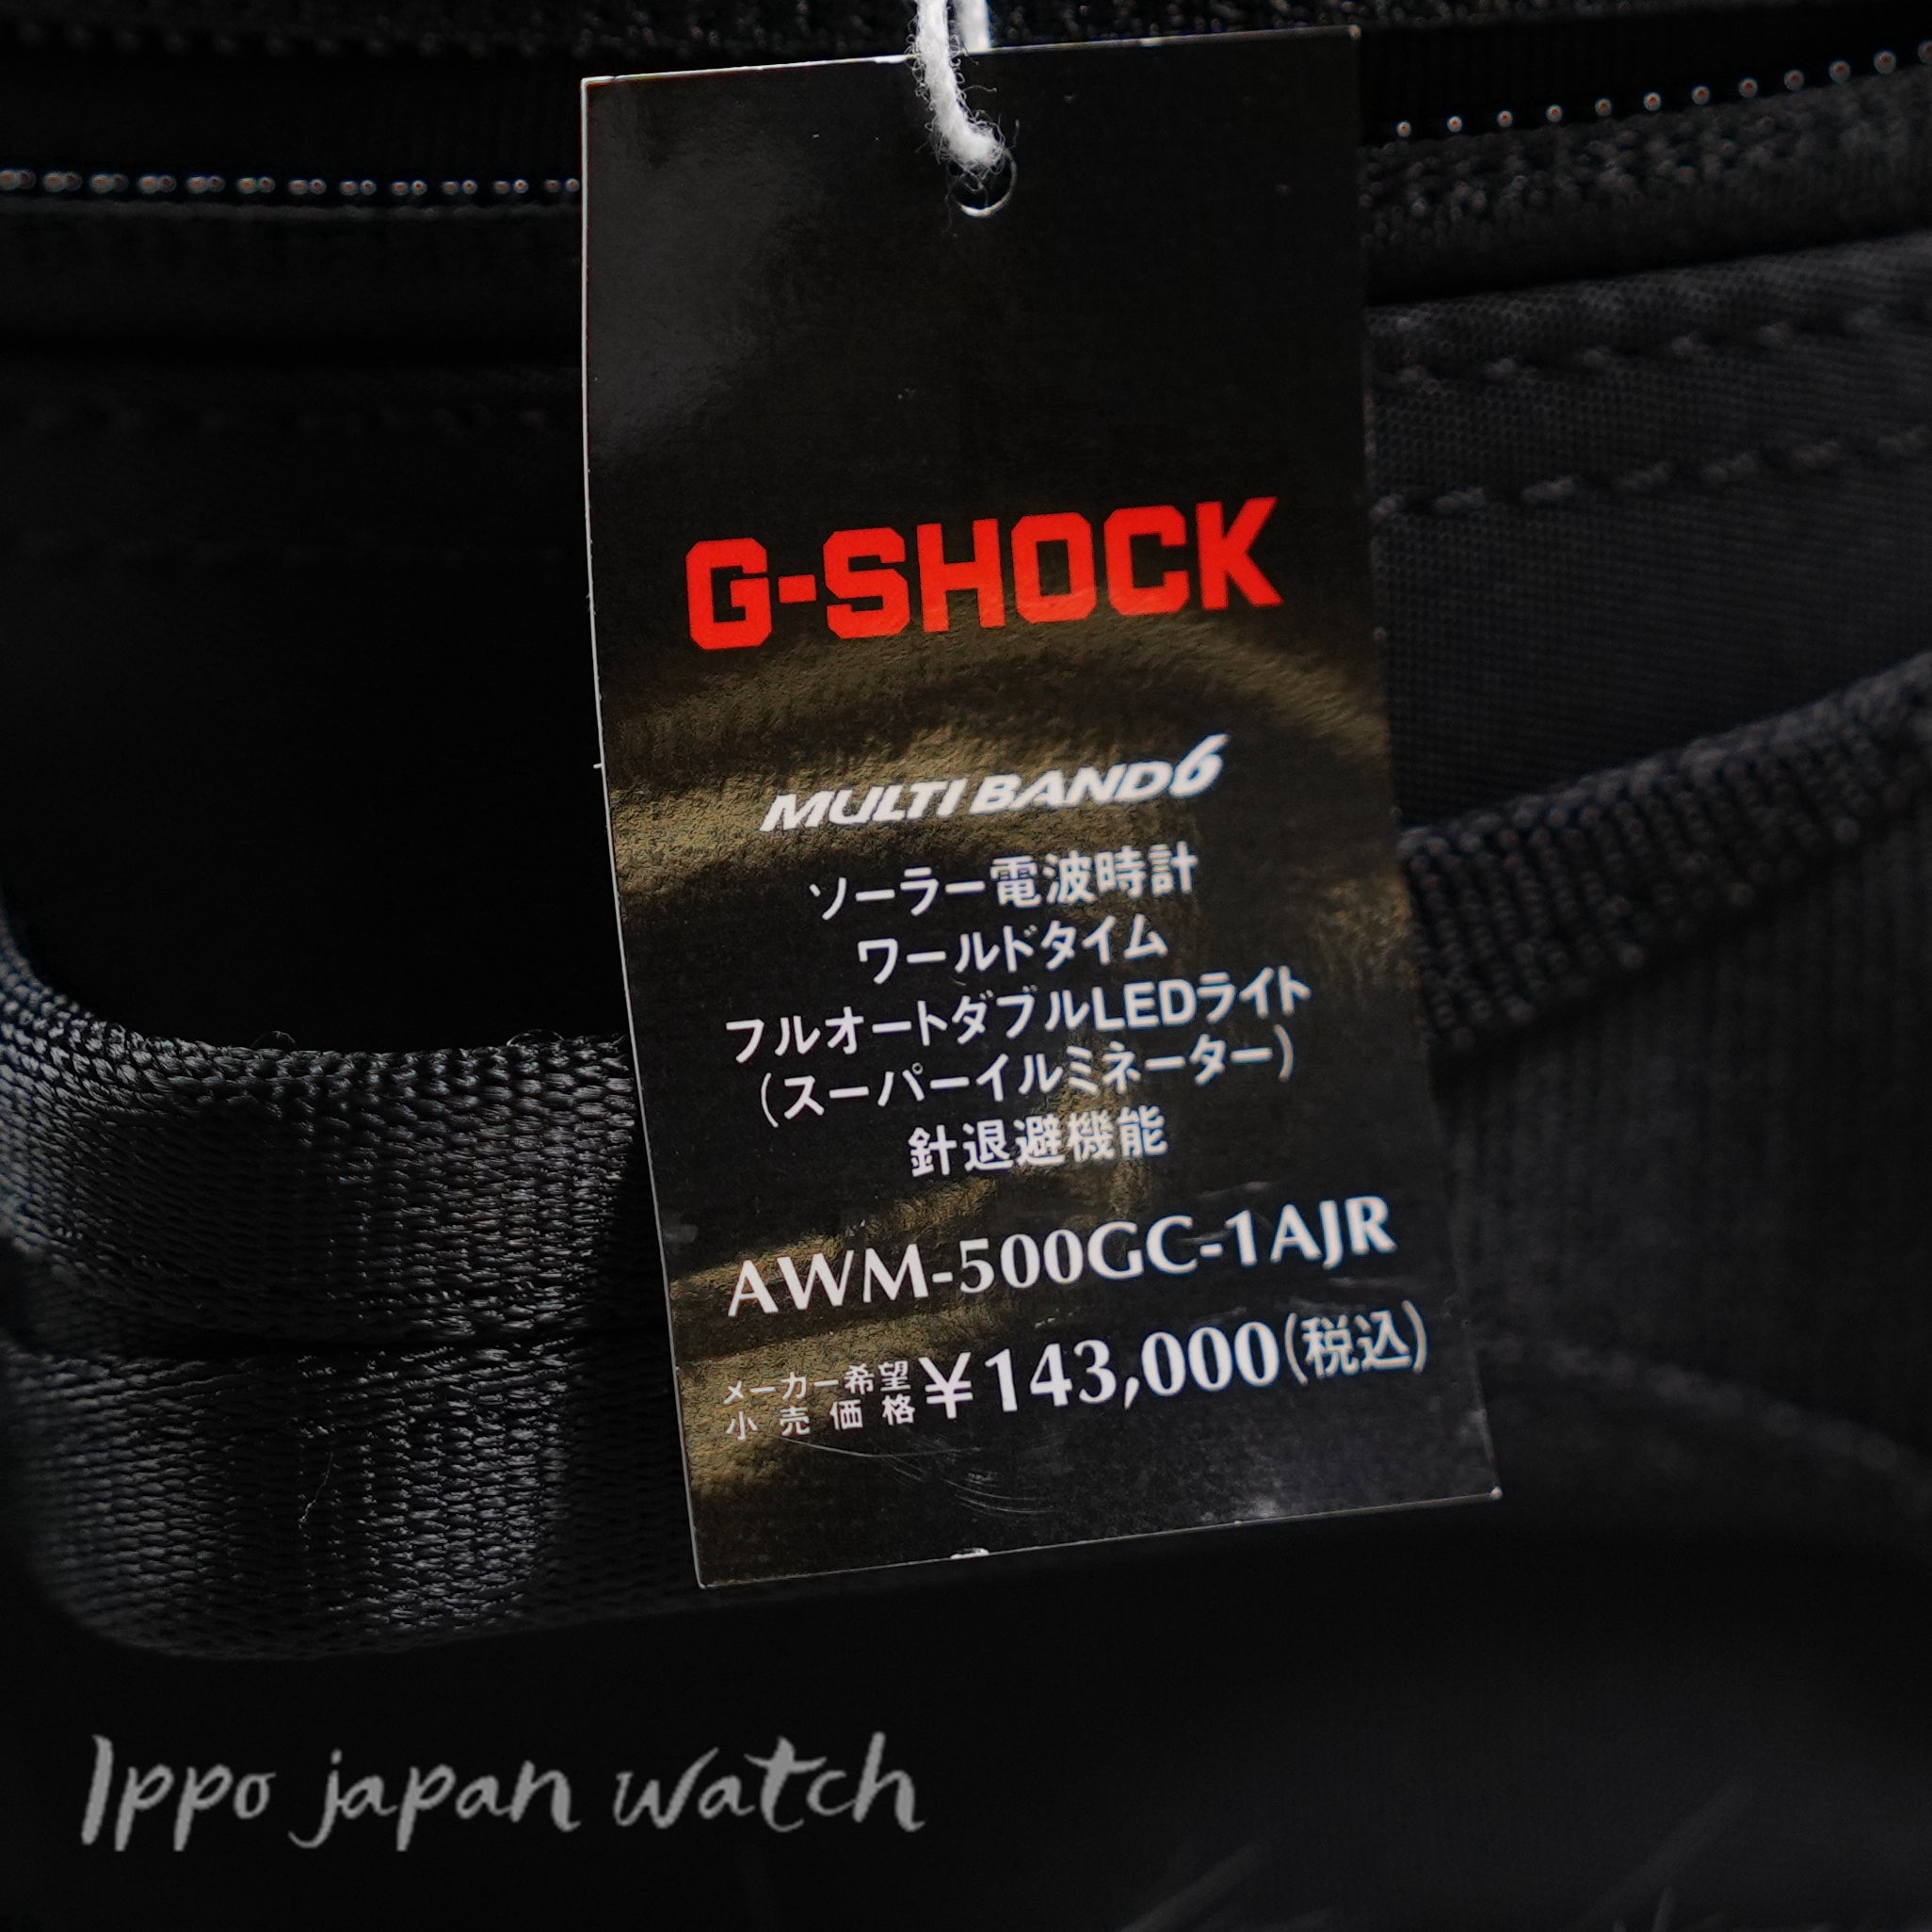 CASIO G-Shock AWM-500GC-1AJR AWM-500GC-1A solar 20 ATM watch - IPPO JAPAN WATCH 